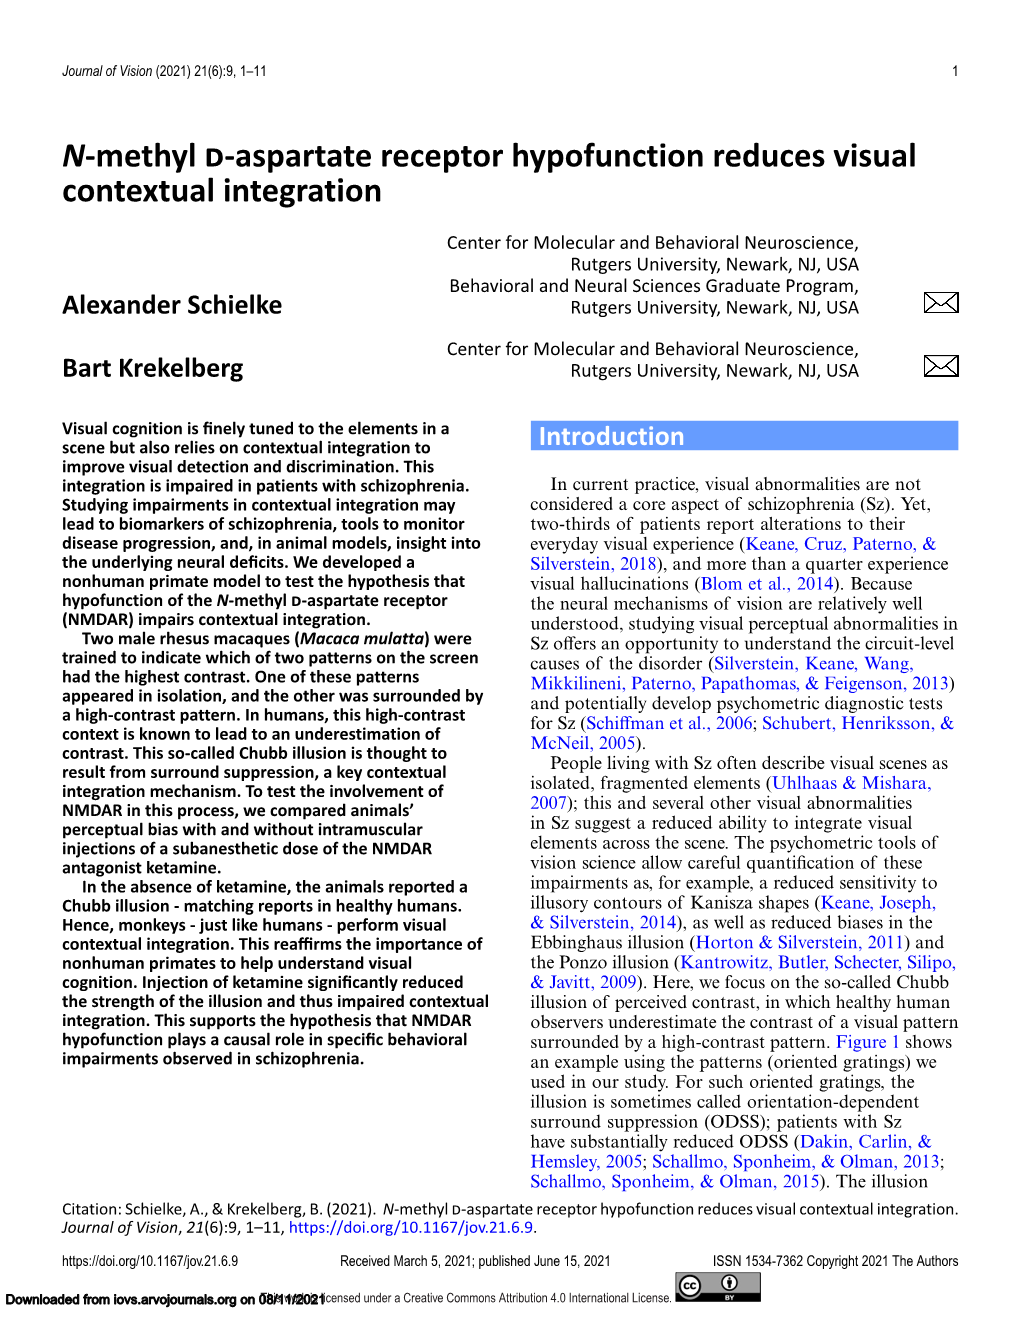 N-Methyl D-Aspartate Receptor Hypofunction Reduces Visual Contextual Integration